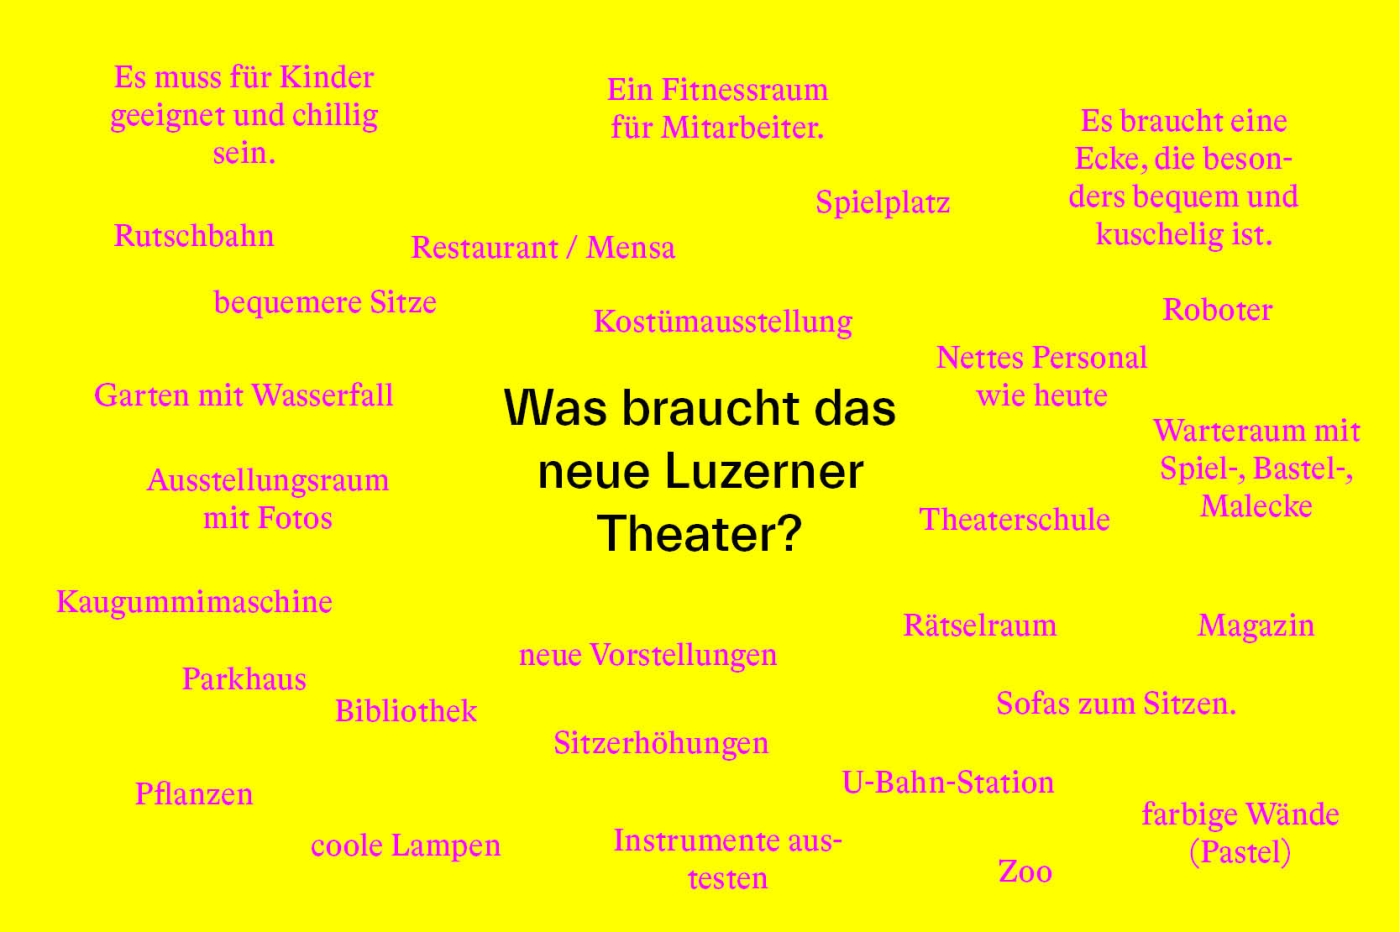 Kinderparlament im Luzerner Theater